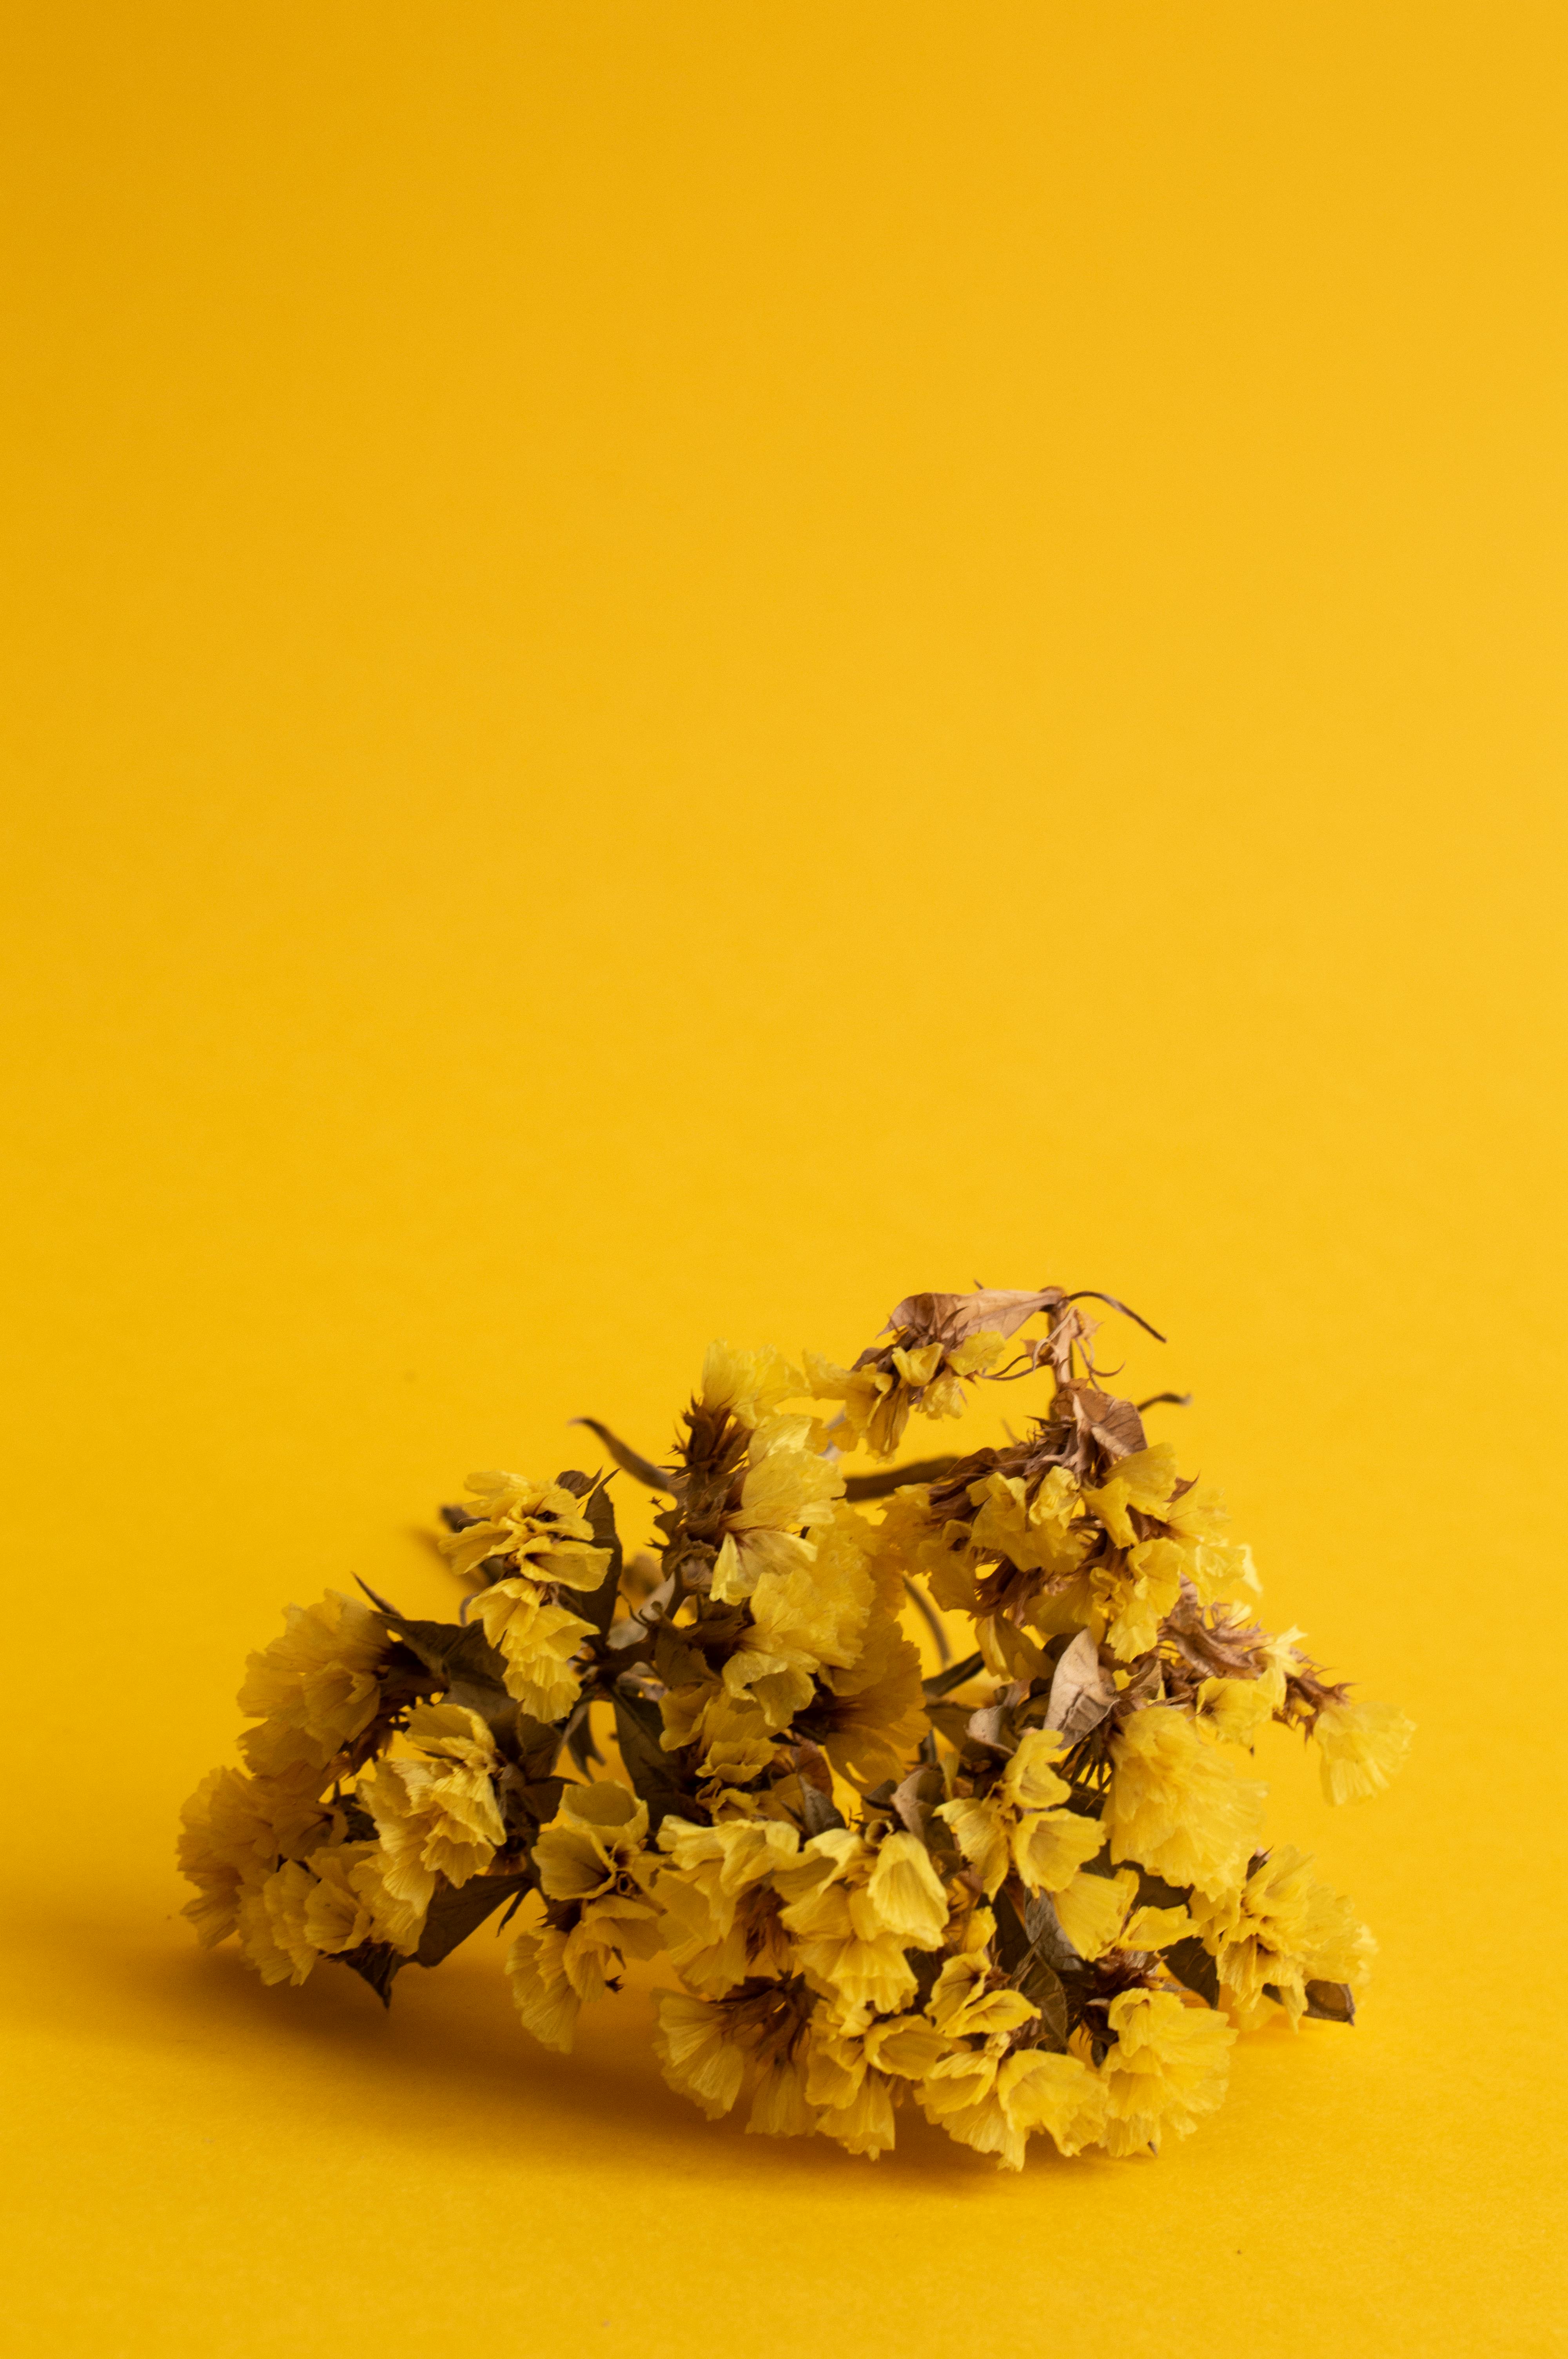 Yellow Flowers On Yellow Background · Free Stock Photo